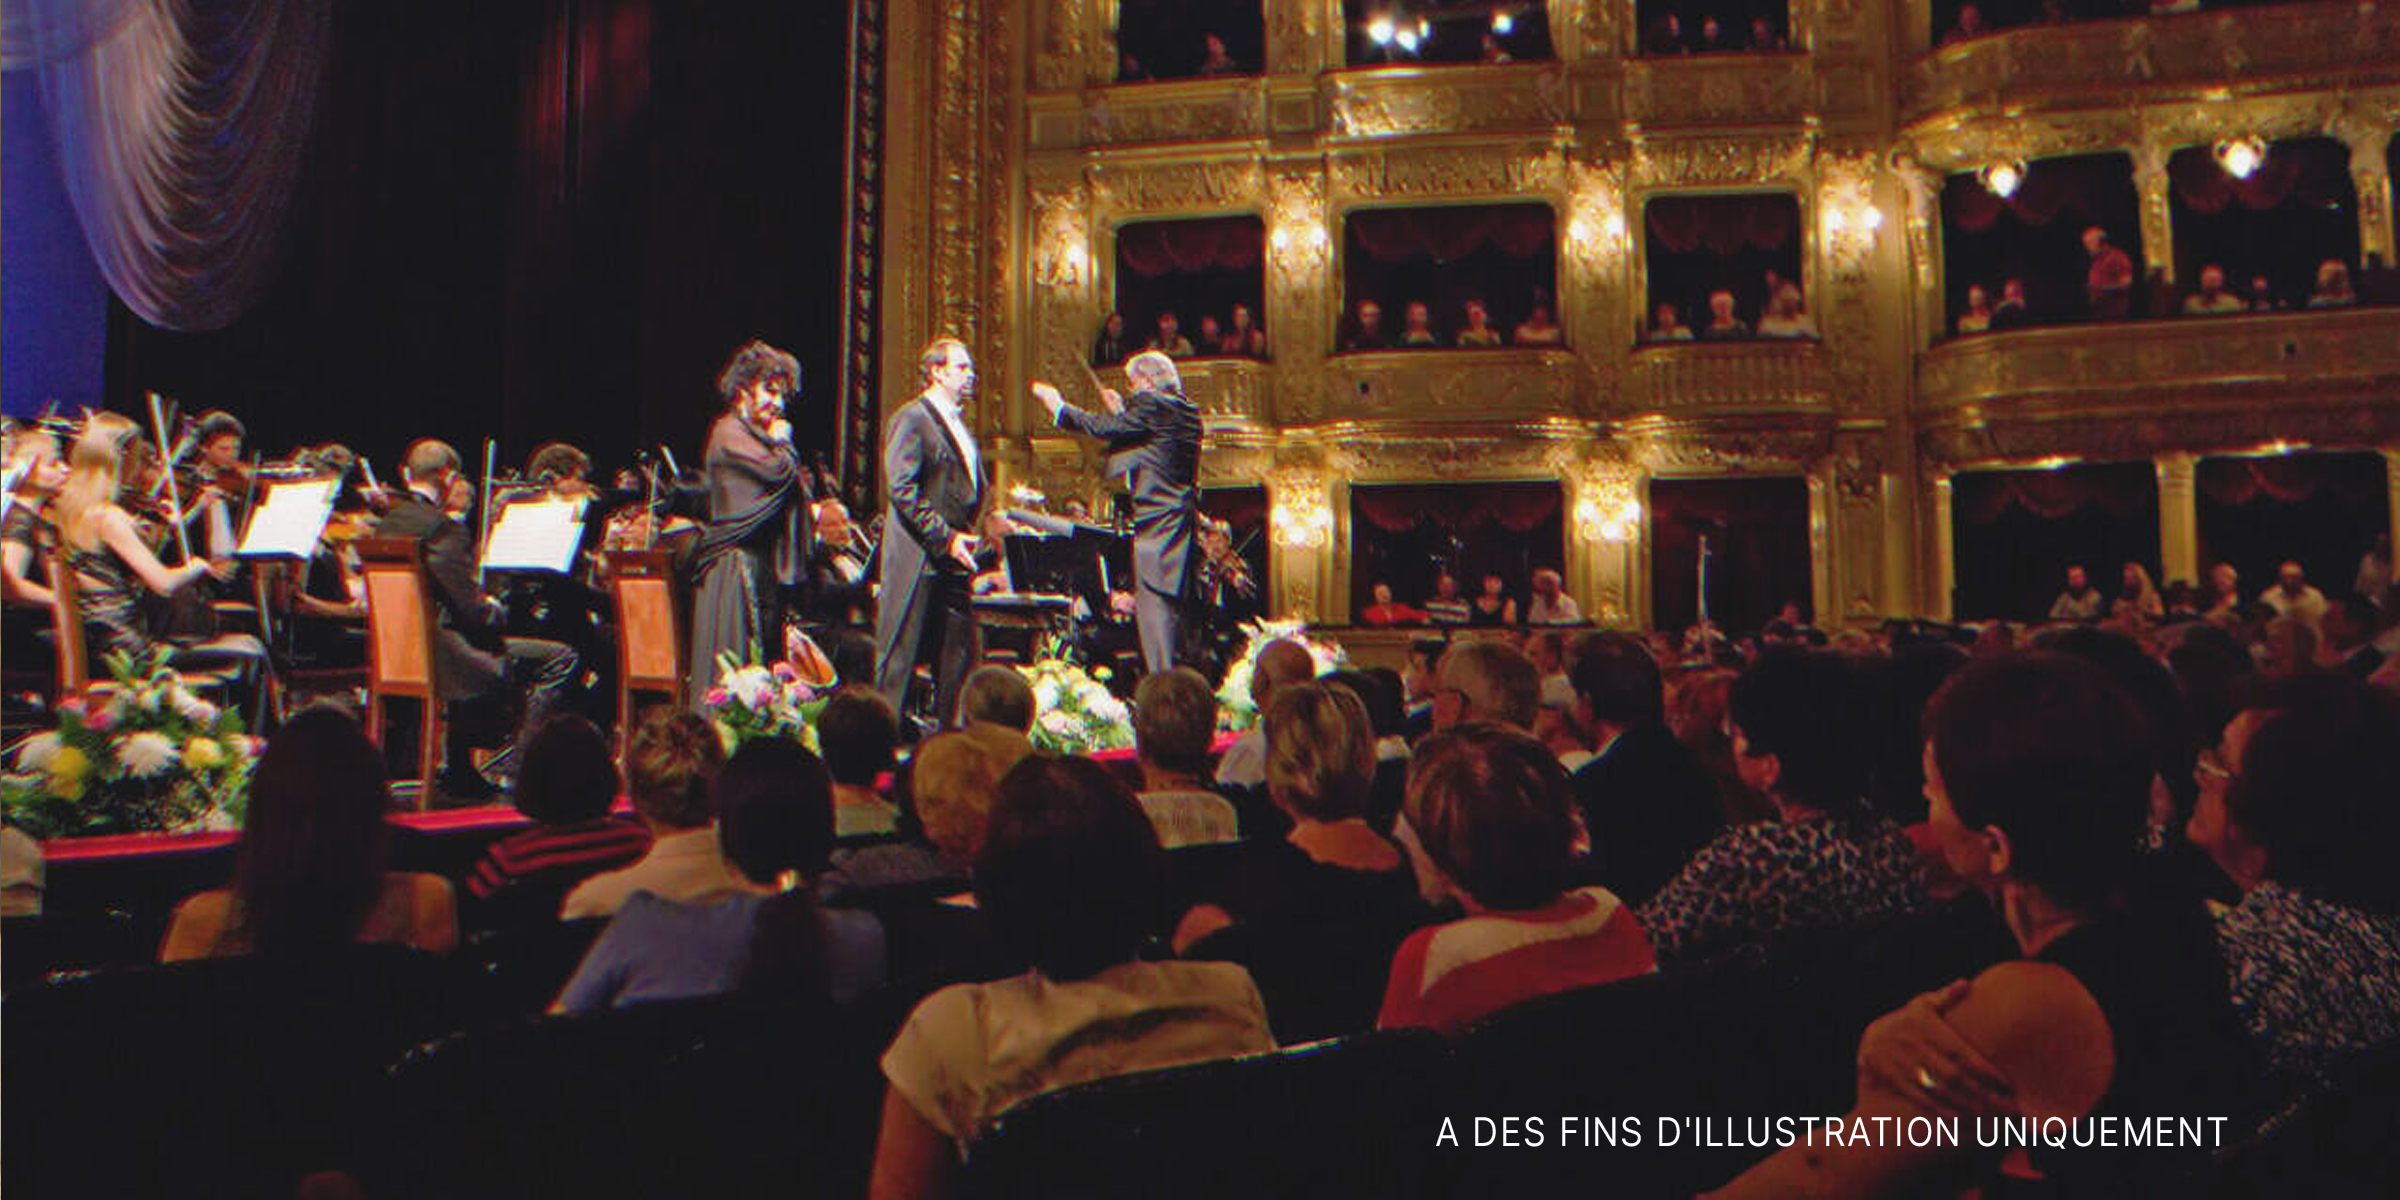 Des gens dans une salle d'opéra | Source : Shutterstock